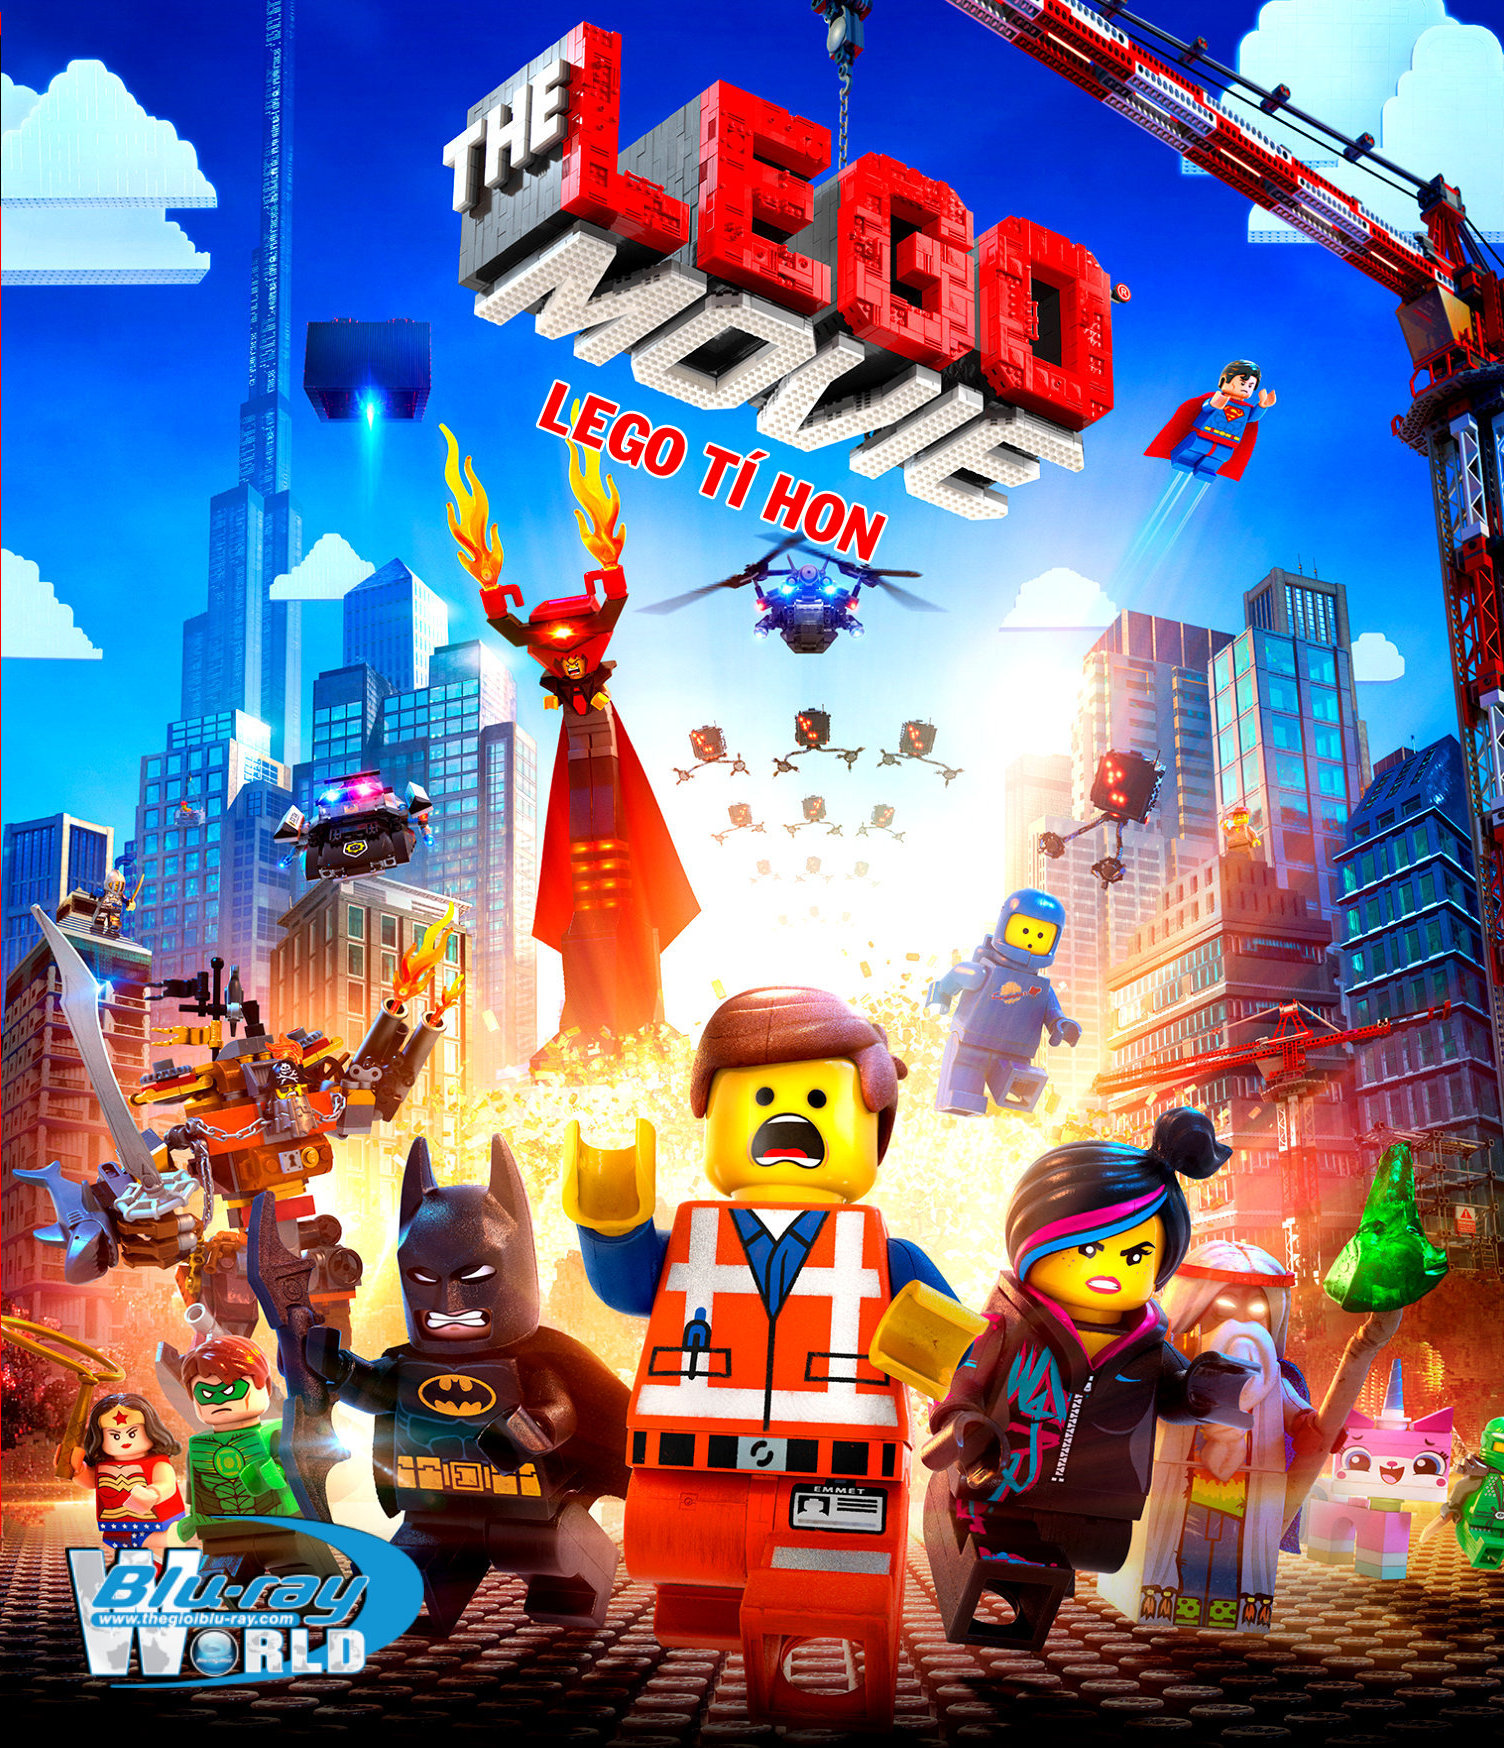 HD0199 - The Lego Movie 2014 - Lego tí hon